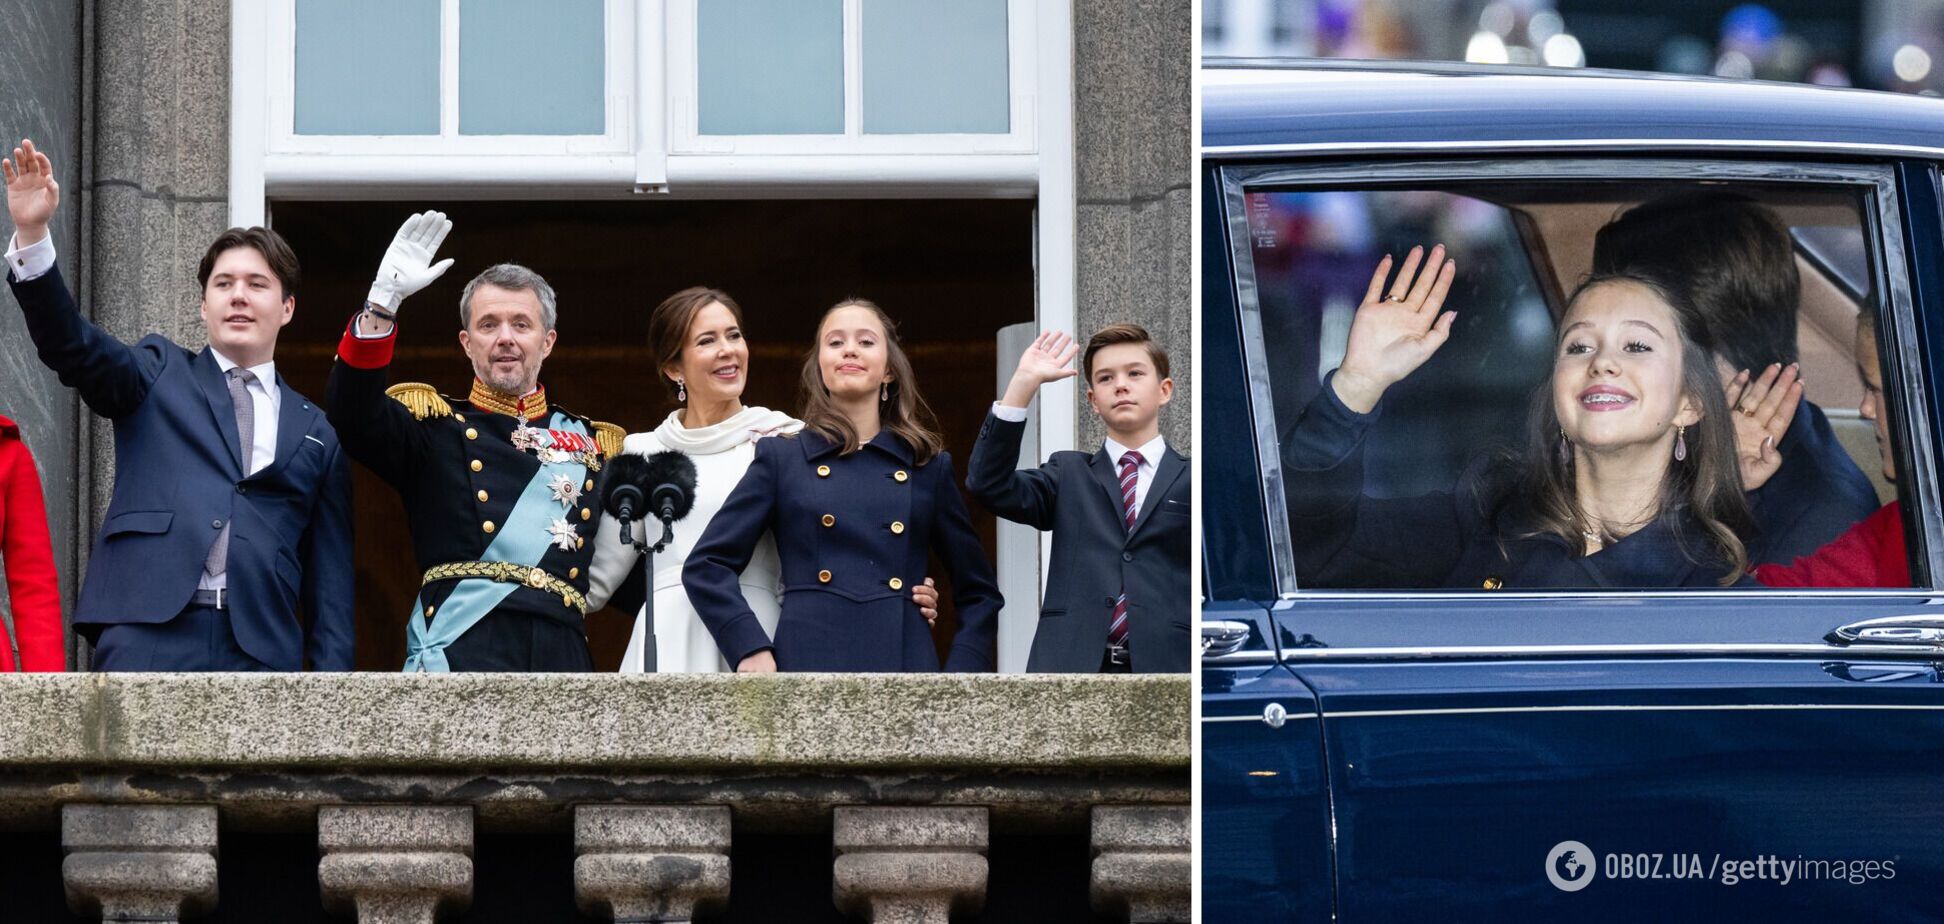 Луи в юбке. 13-летняя принцесса Жозефина украла все внимание публики на церемонии провозглашения Фредерика X королем Дании